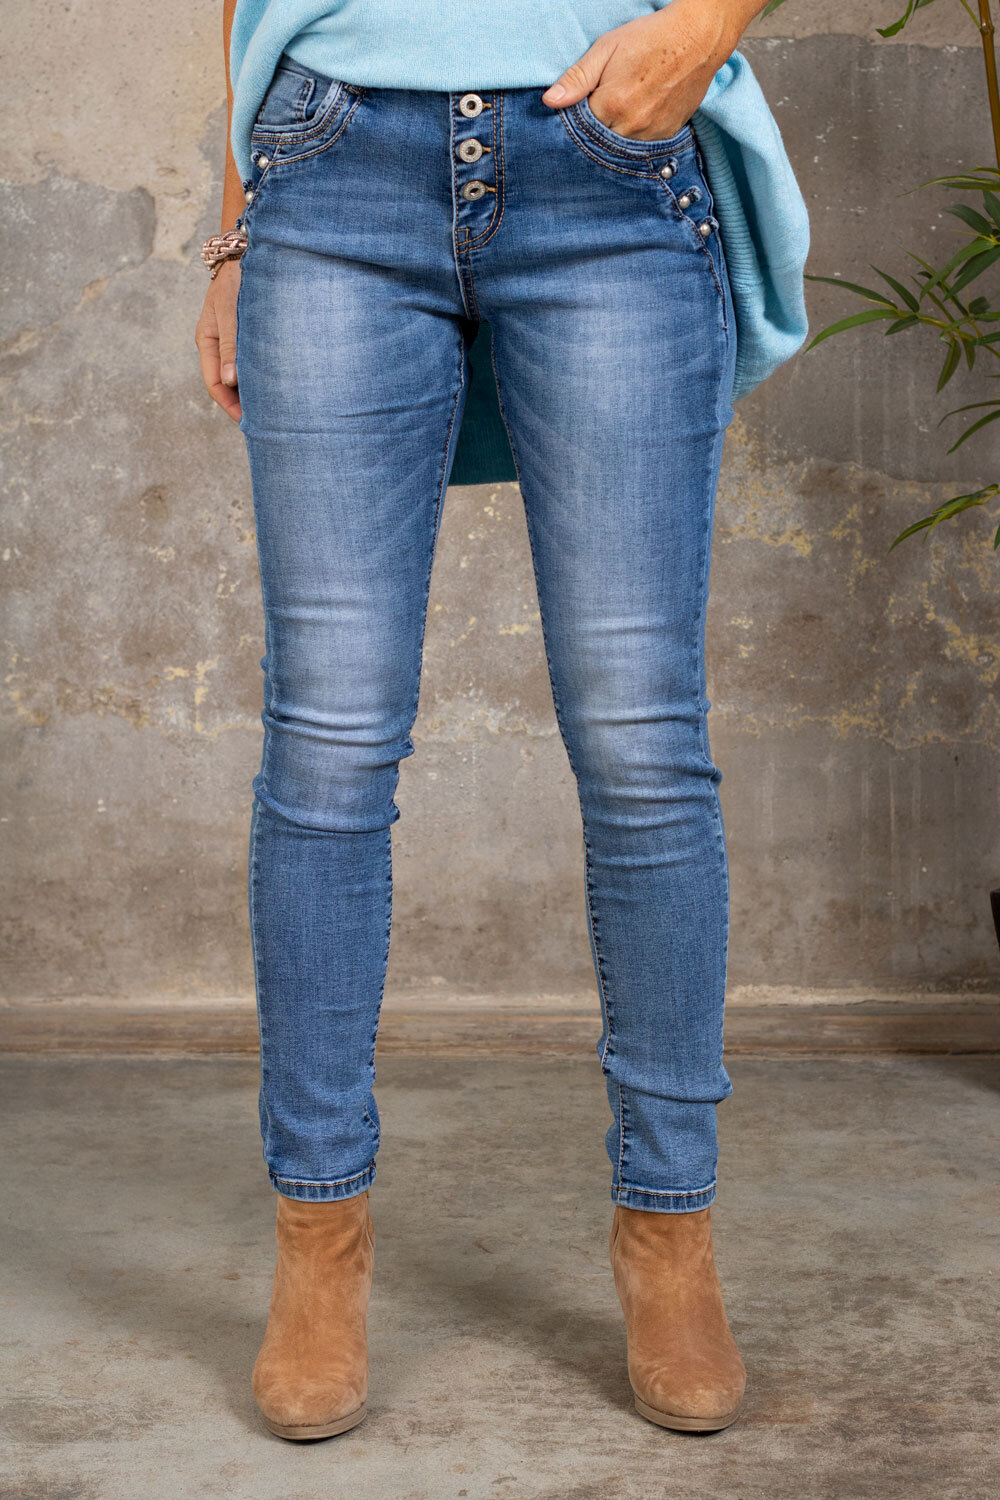 Jeans JW1507 - Nitar - Ljustvätt